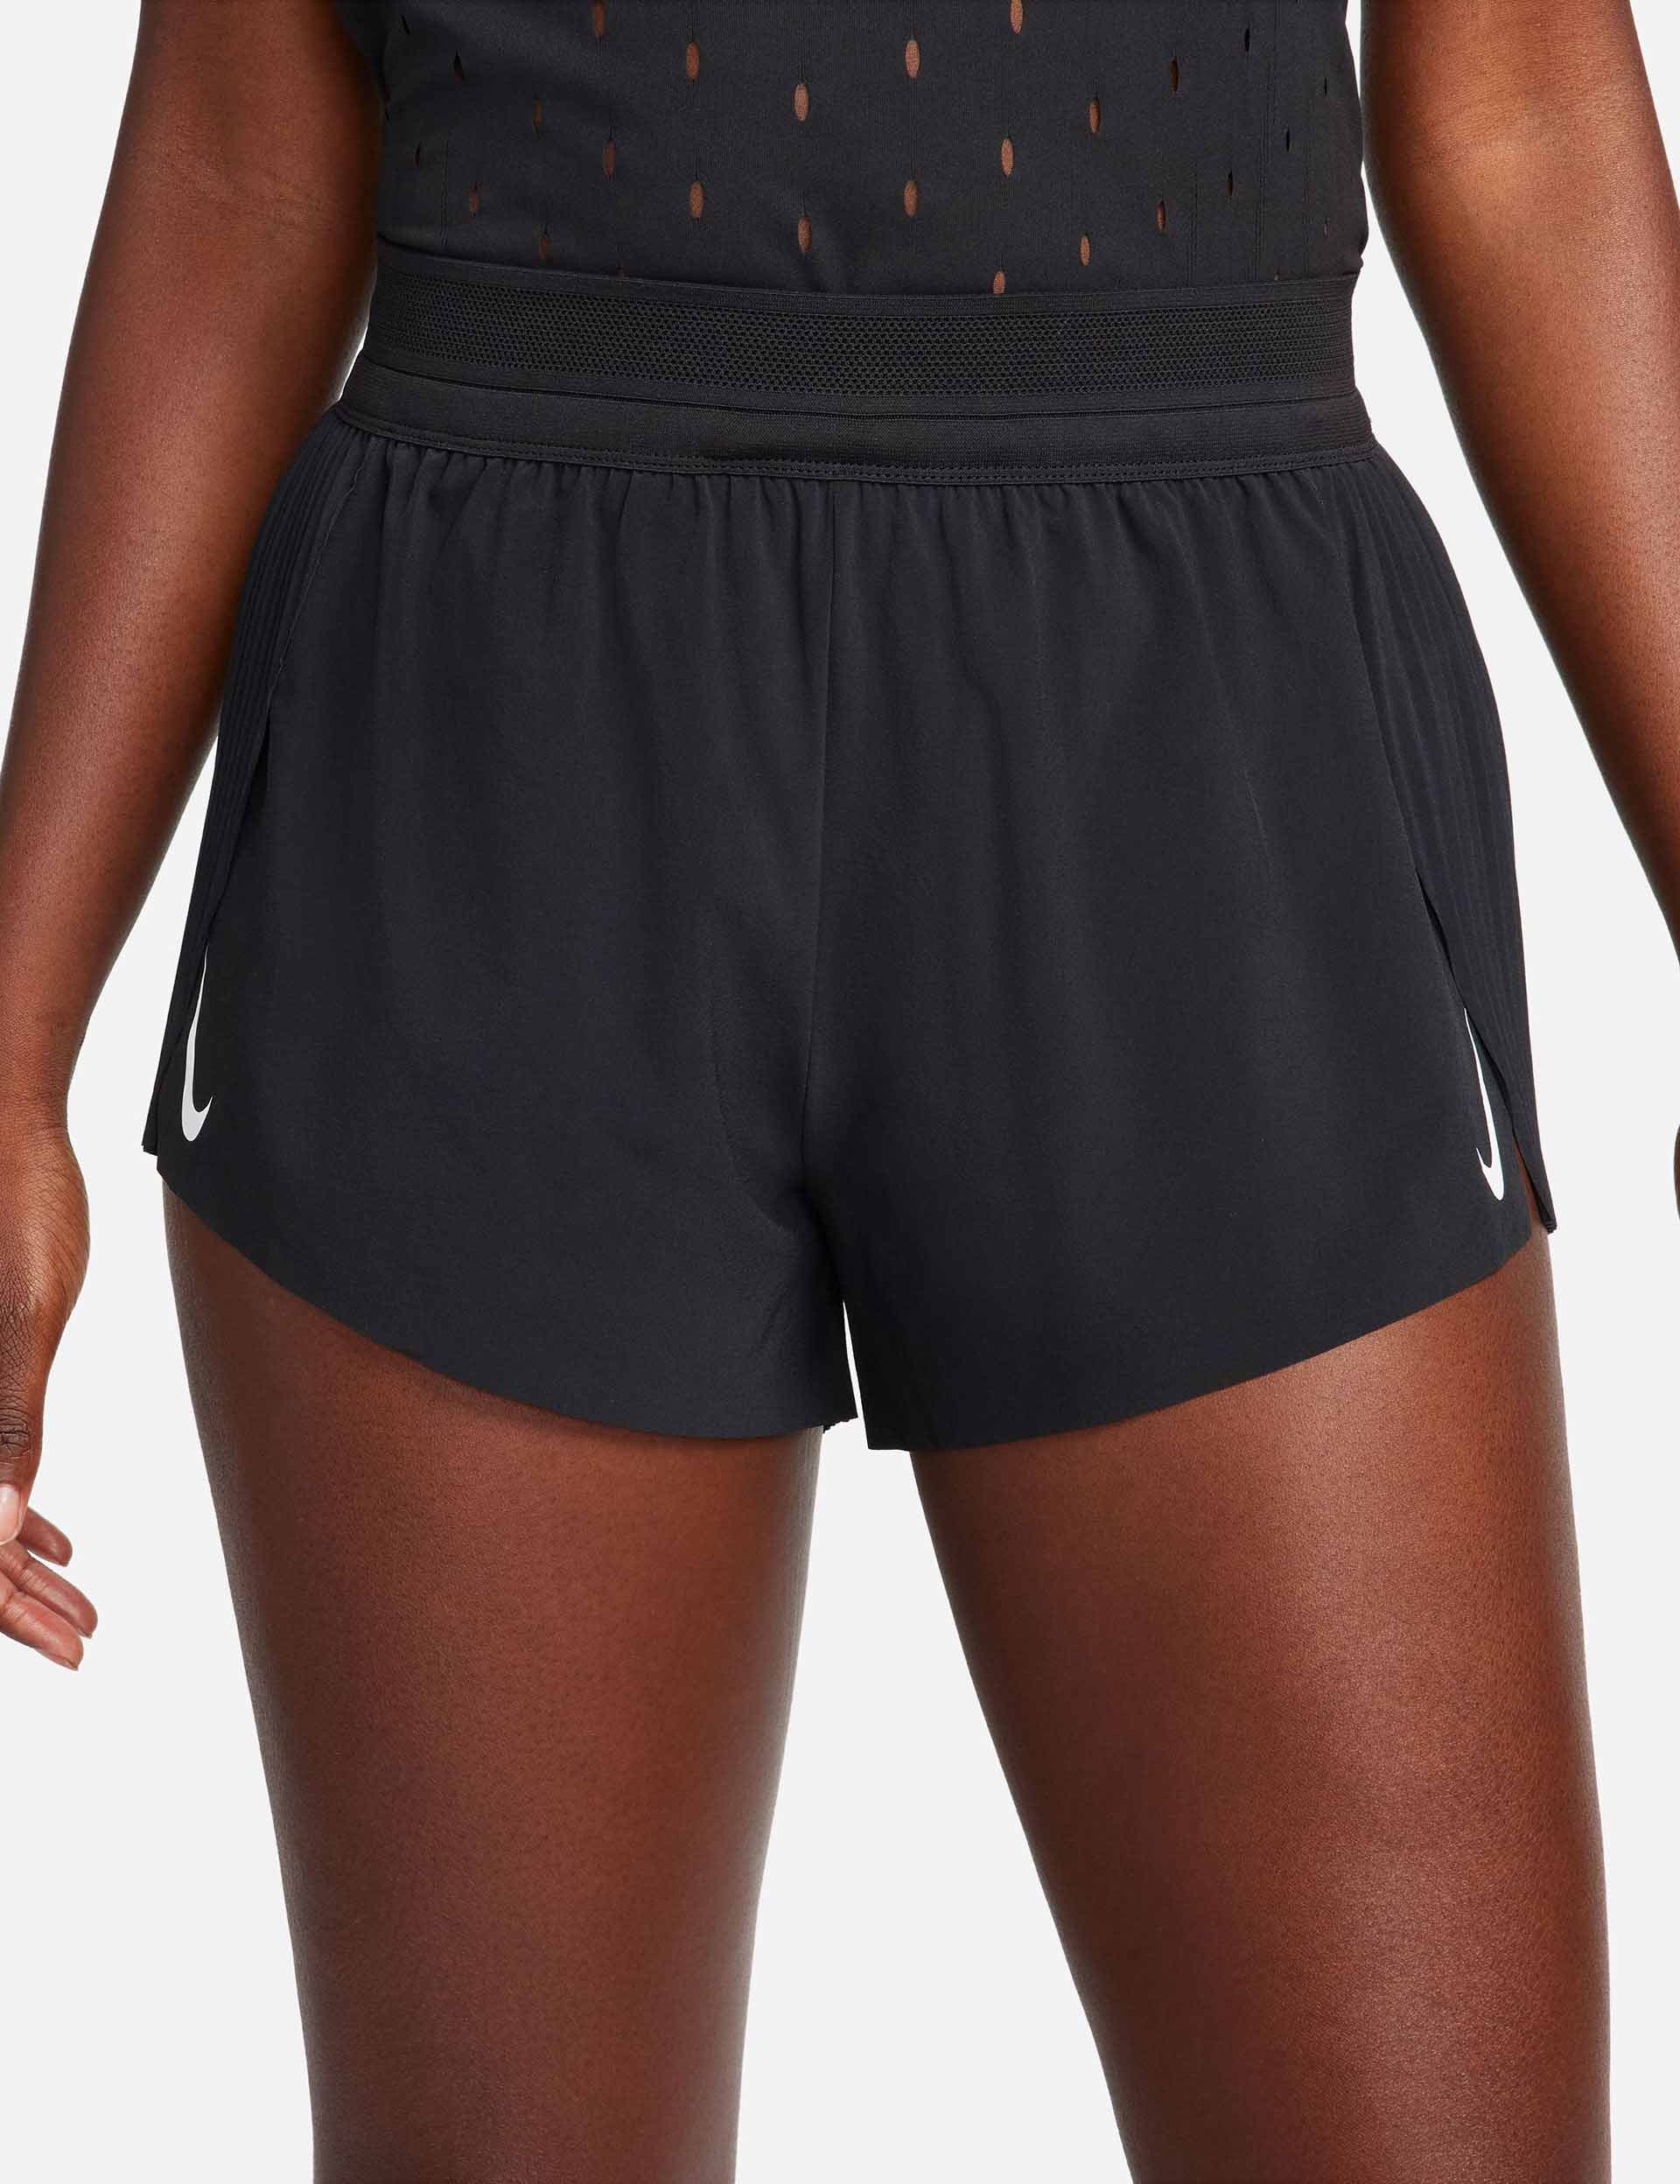 Nike AeroSwift Running Shorts - Running shorts Women's, Buy online